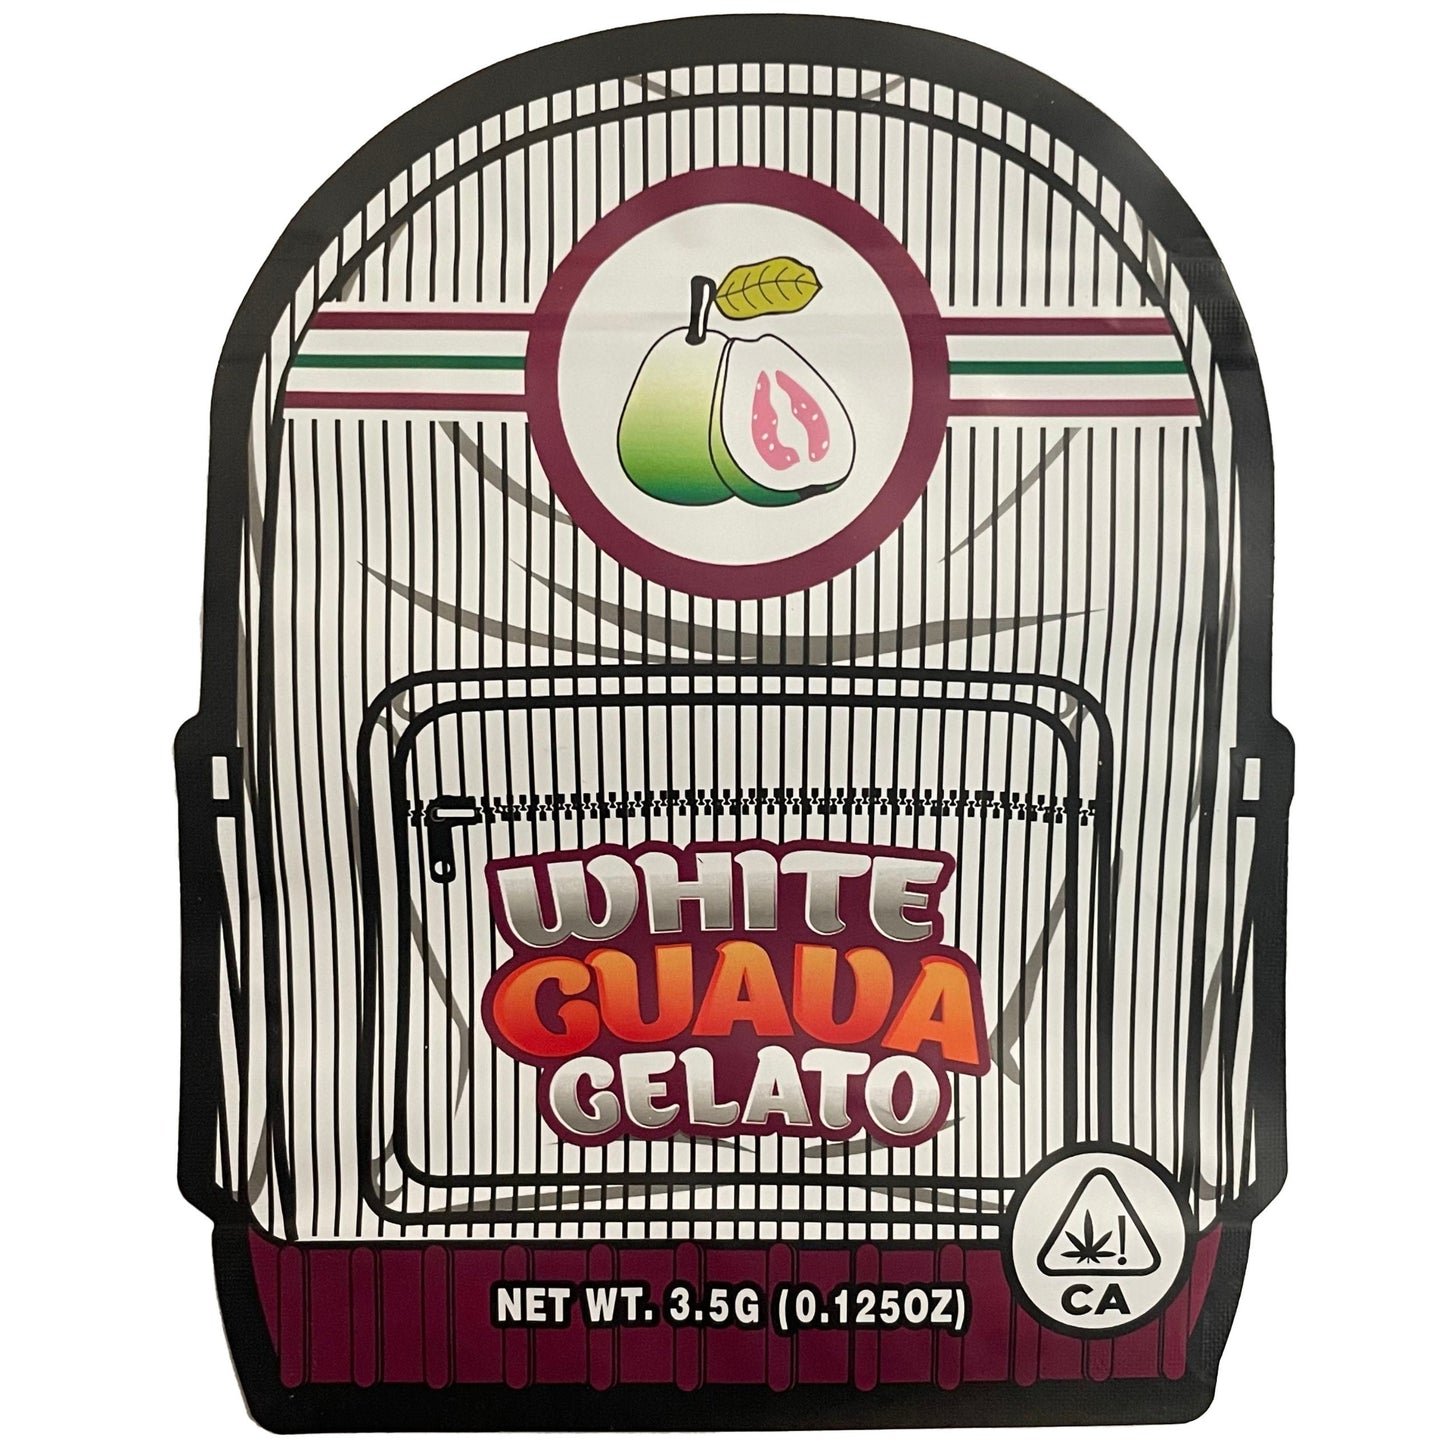 White Guava Gelato 3.5G Mylar Bags